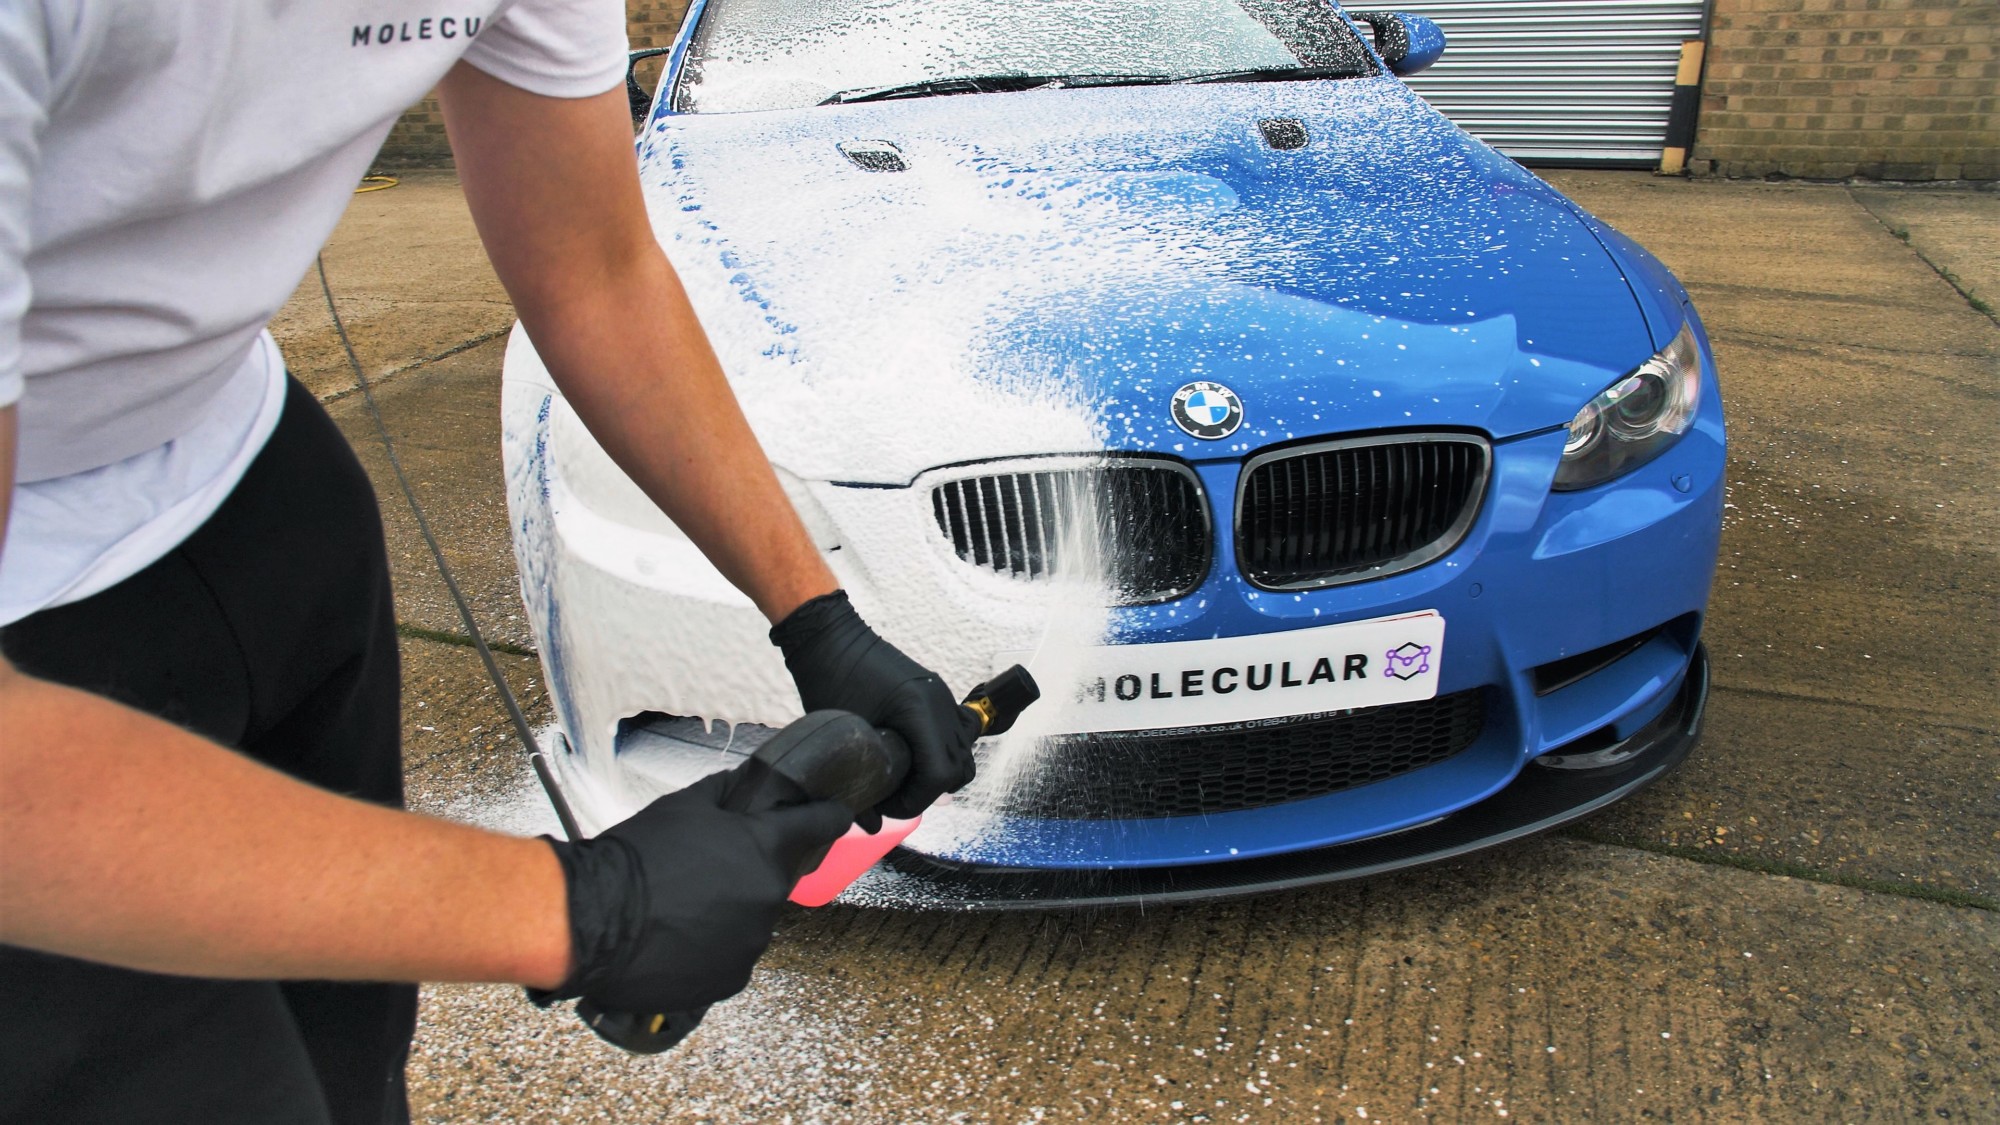 Cyclone Premium Snow Foam being applied to blue BMW